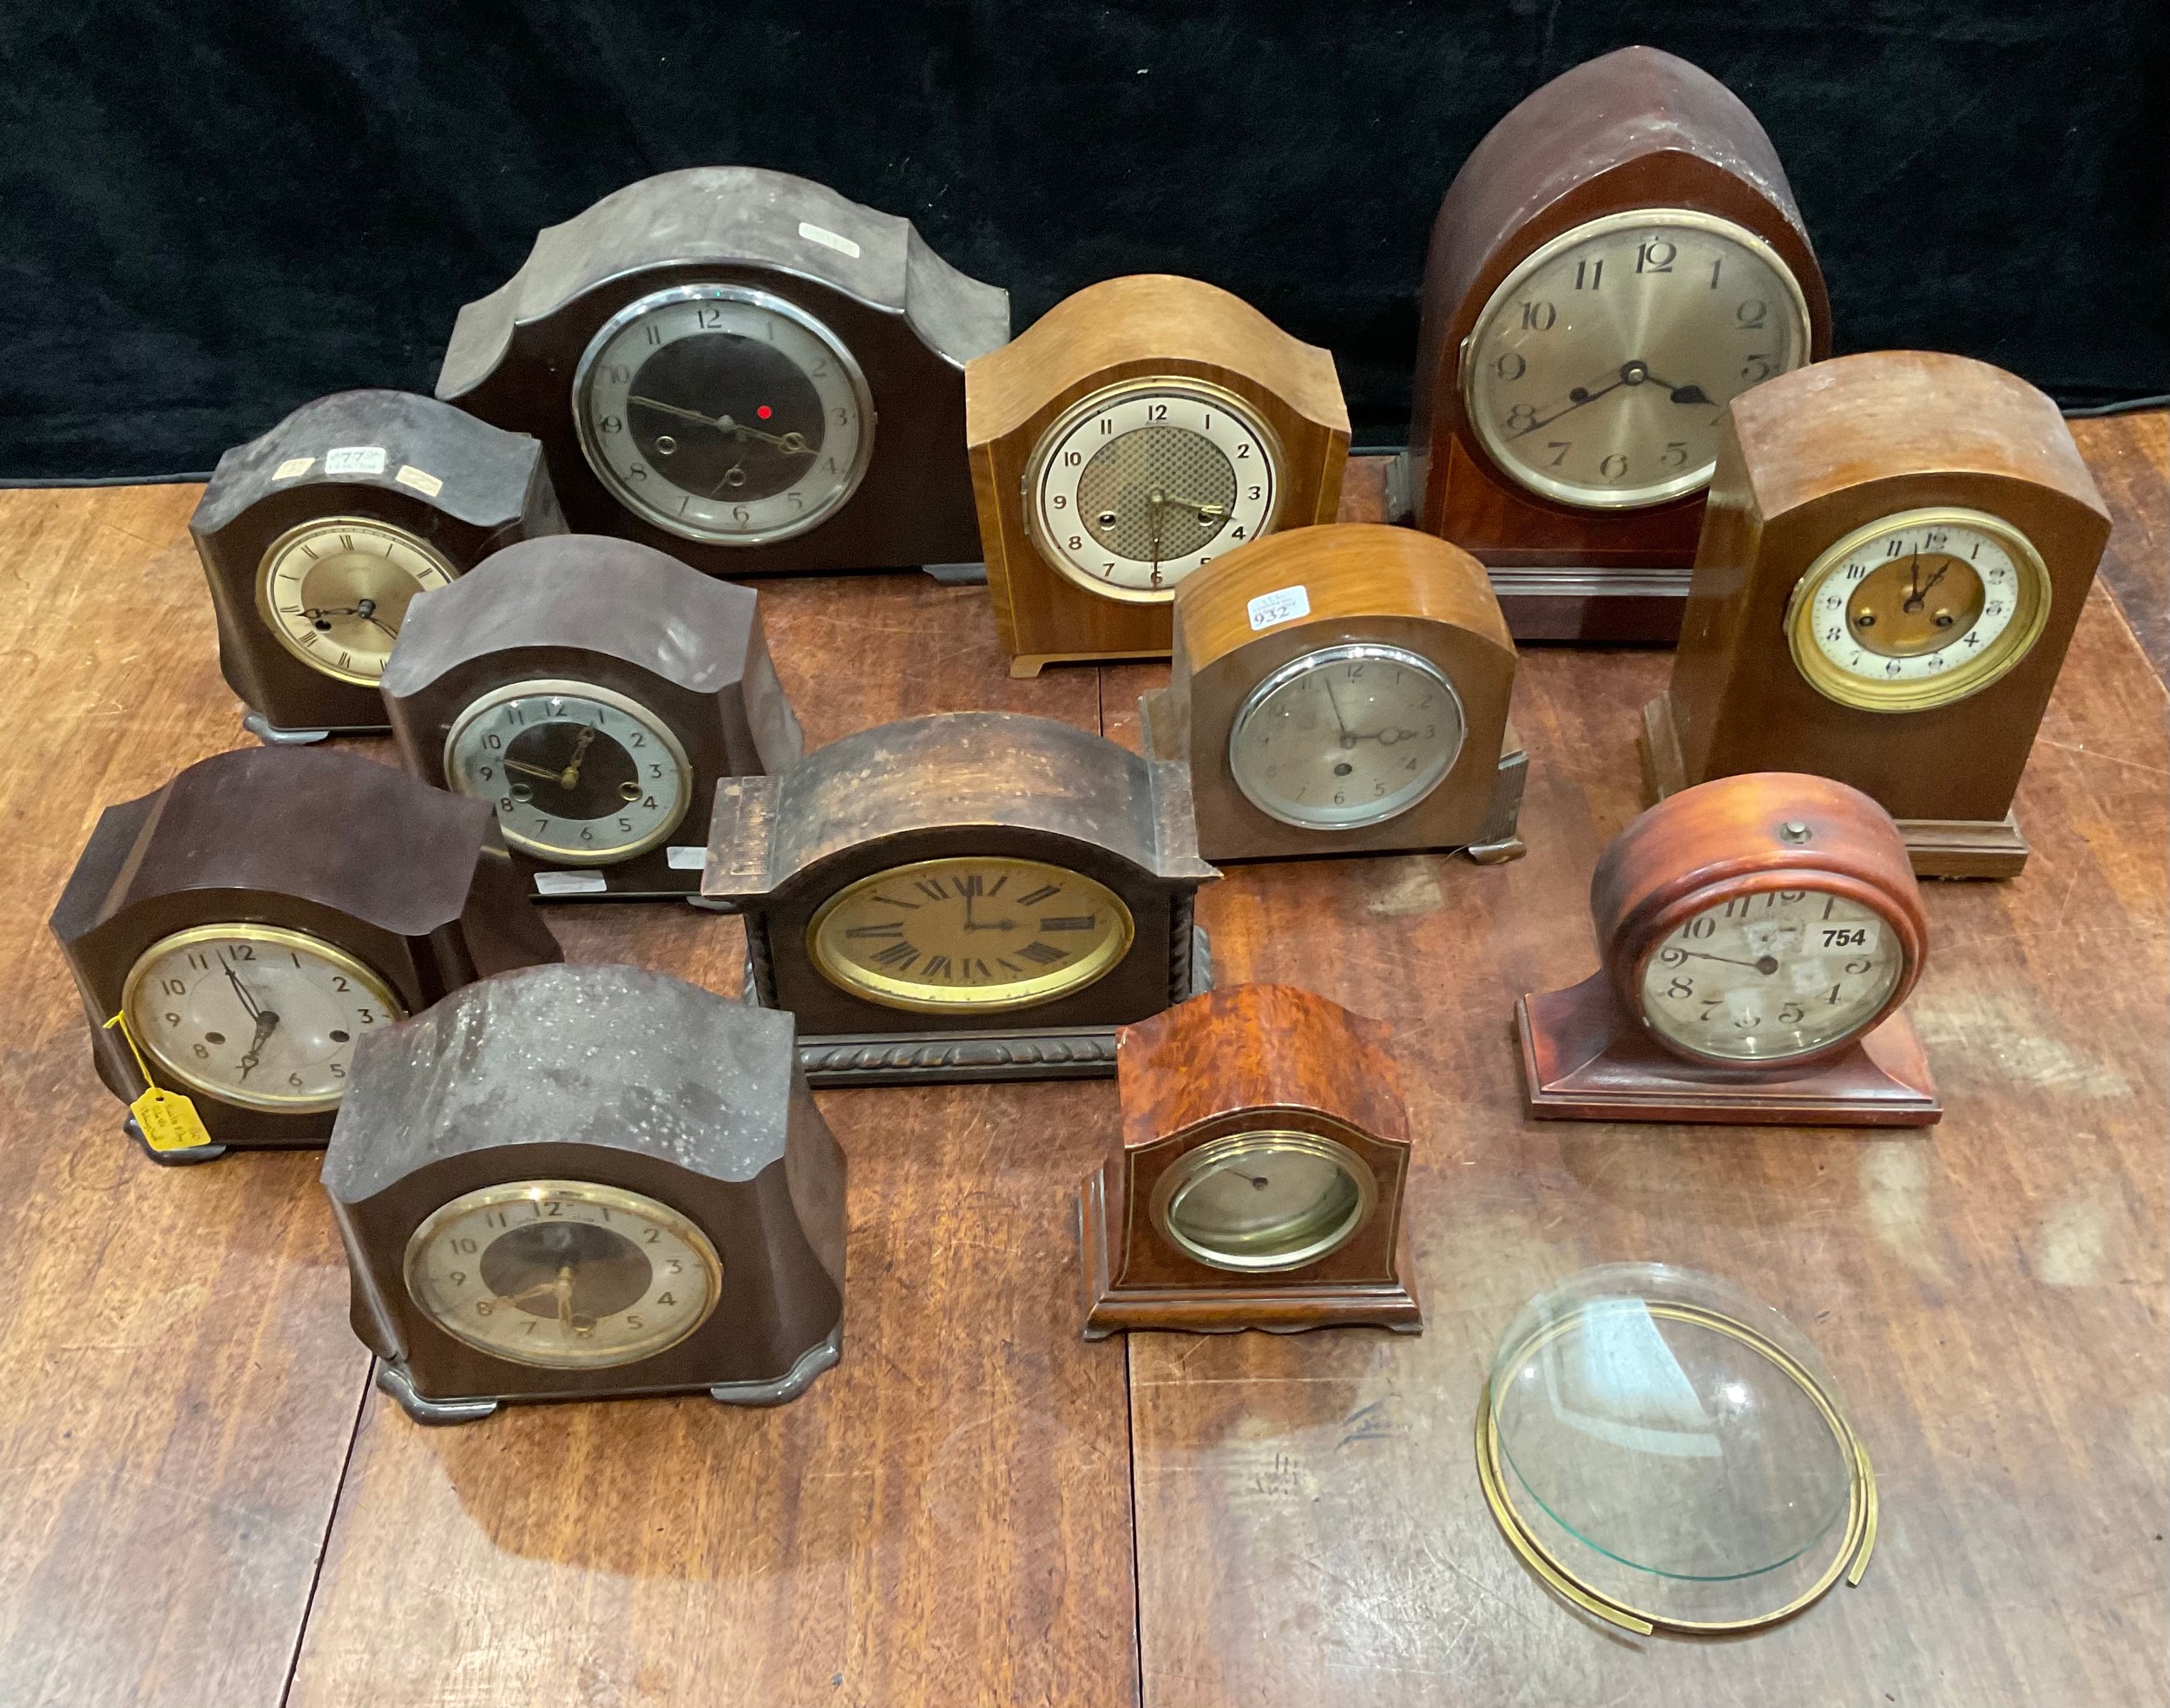 Clocks - early and mid 20th century mantel clocks, Bakelite, burr walnut, etc, various makers, - Image 2 of 2